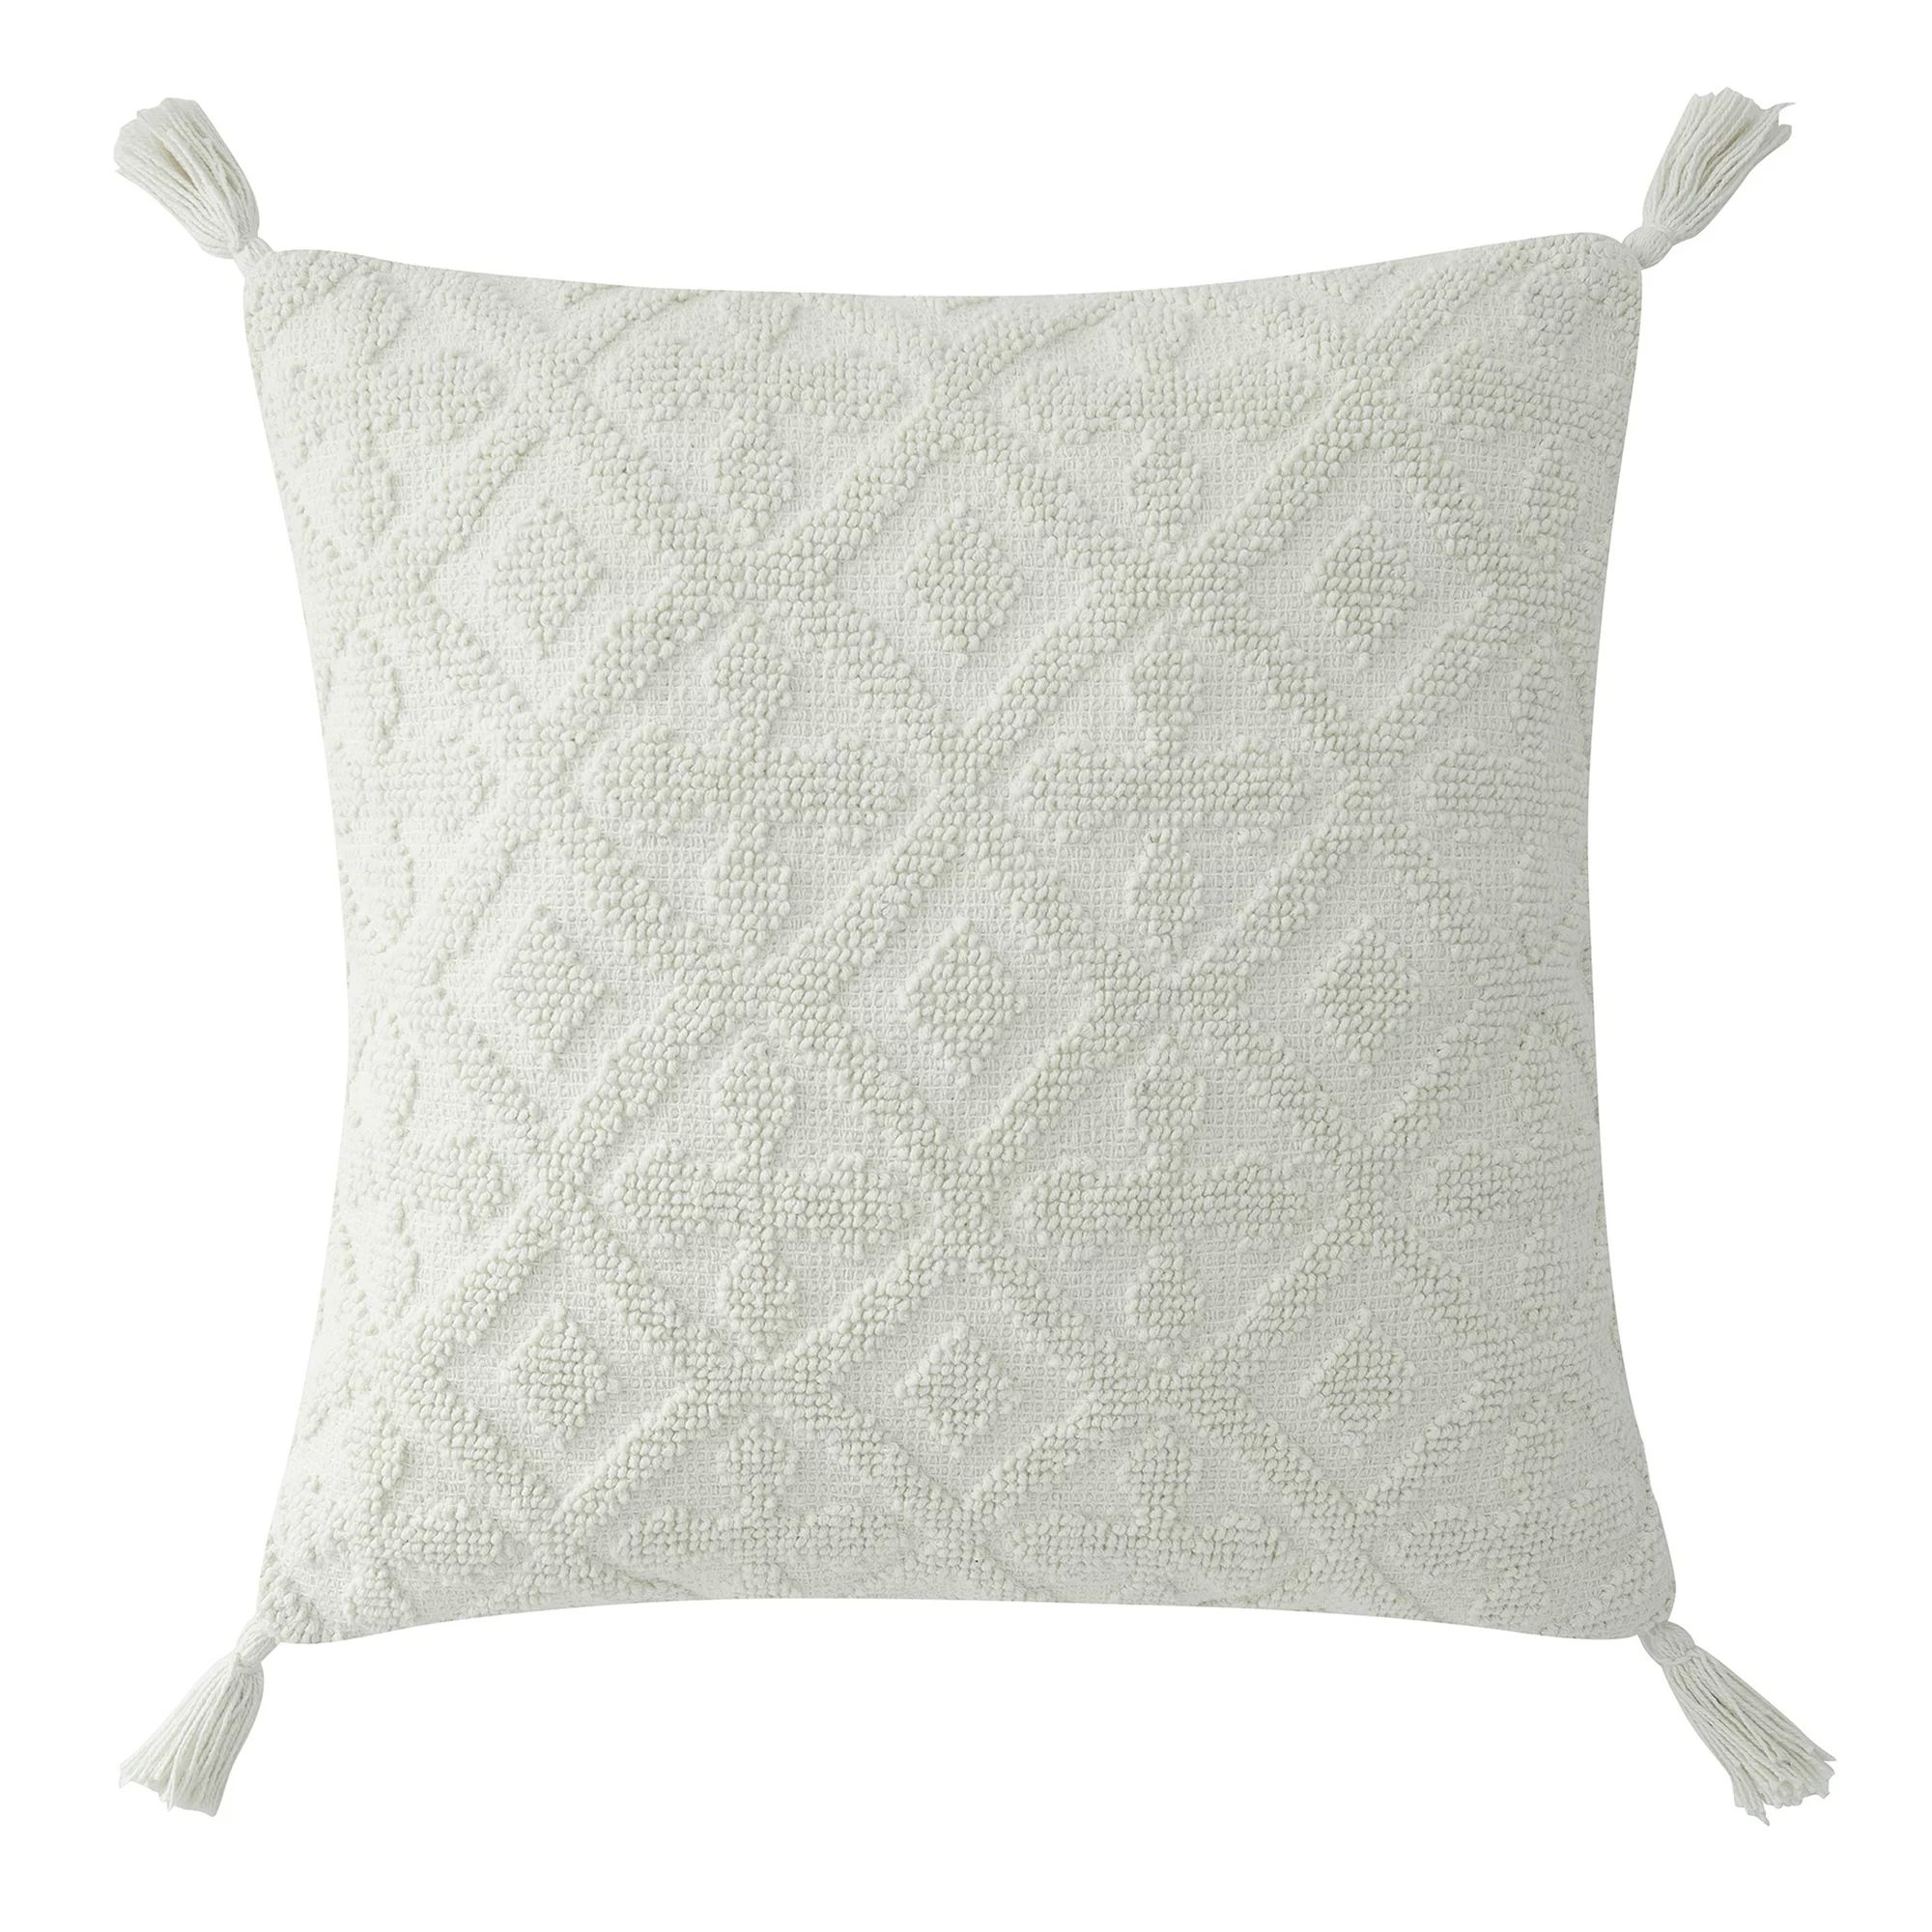 My Texas House Sutton Cotton Tufted Decorative Pillow Cover, 20"x20", Coconut Milk | Walmart (US)